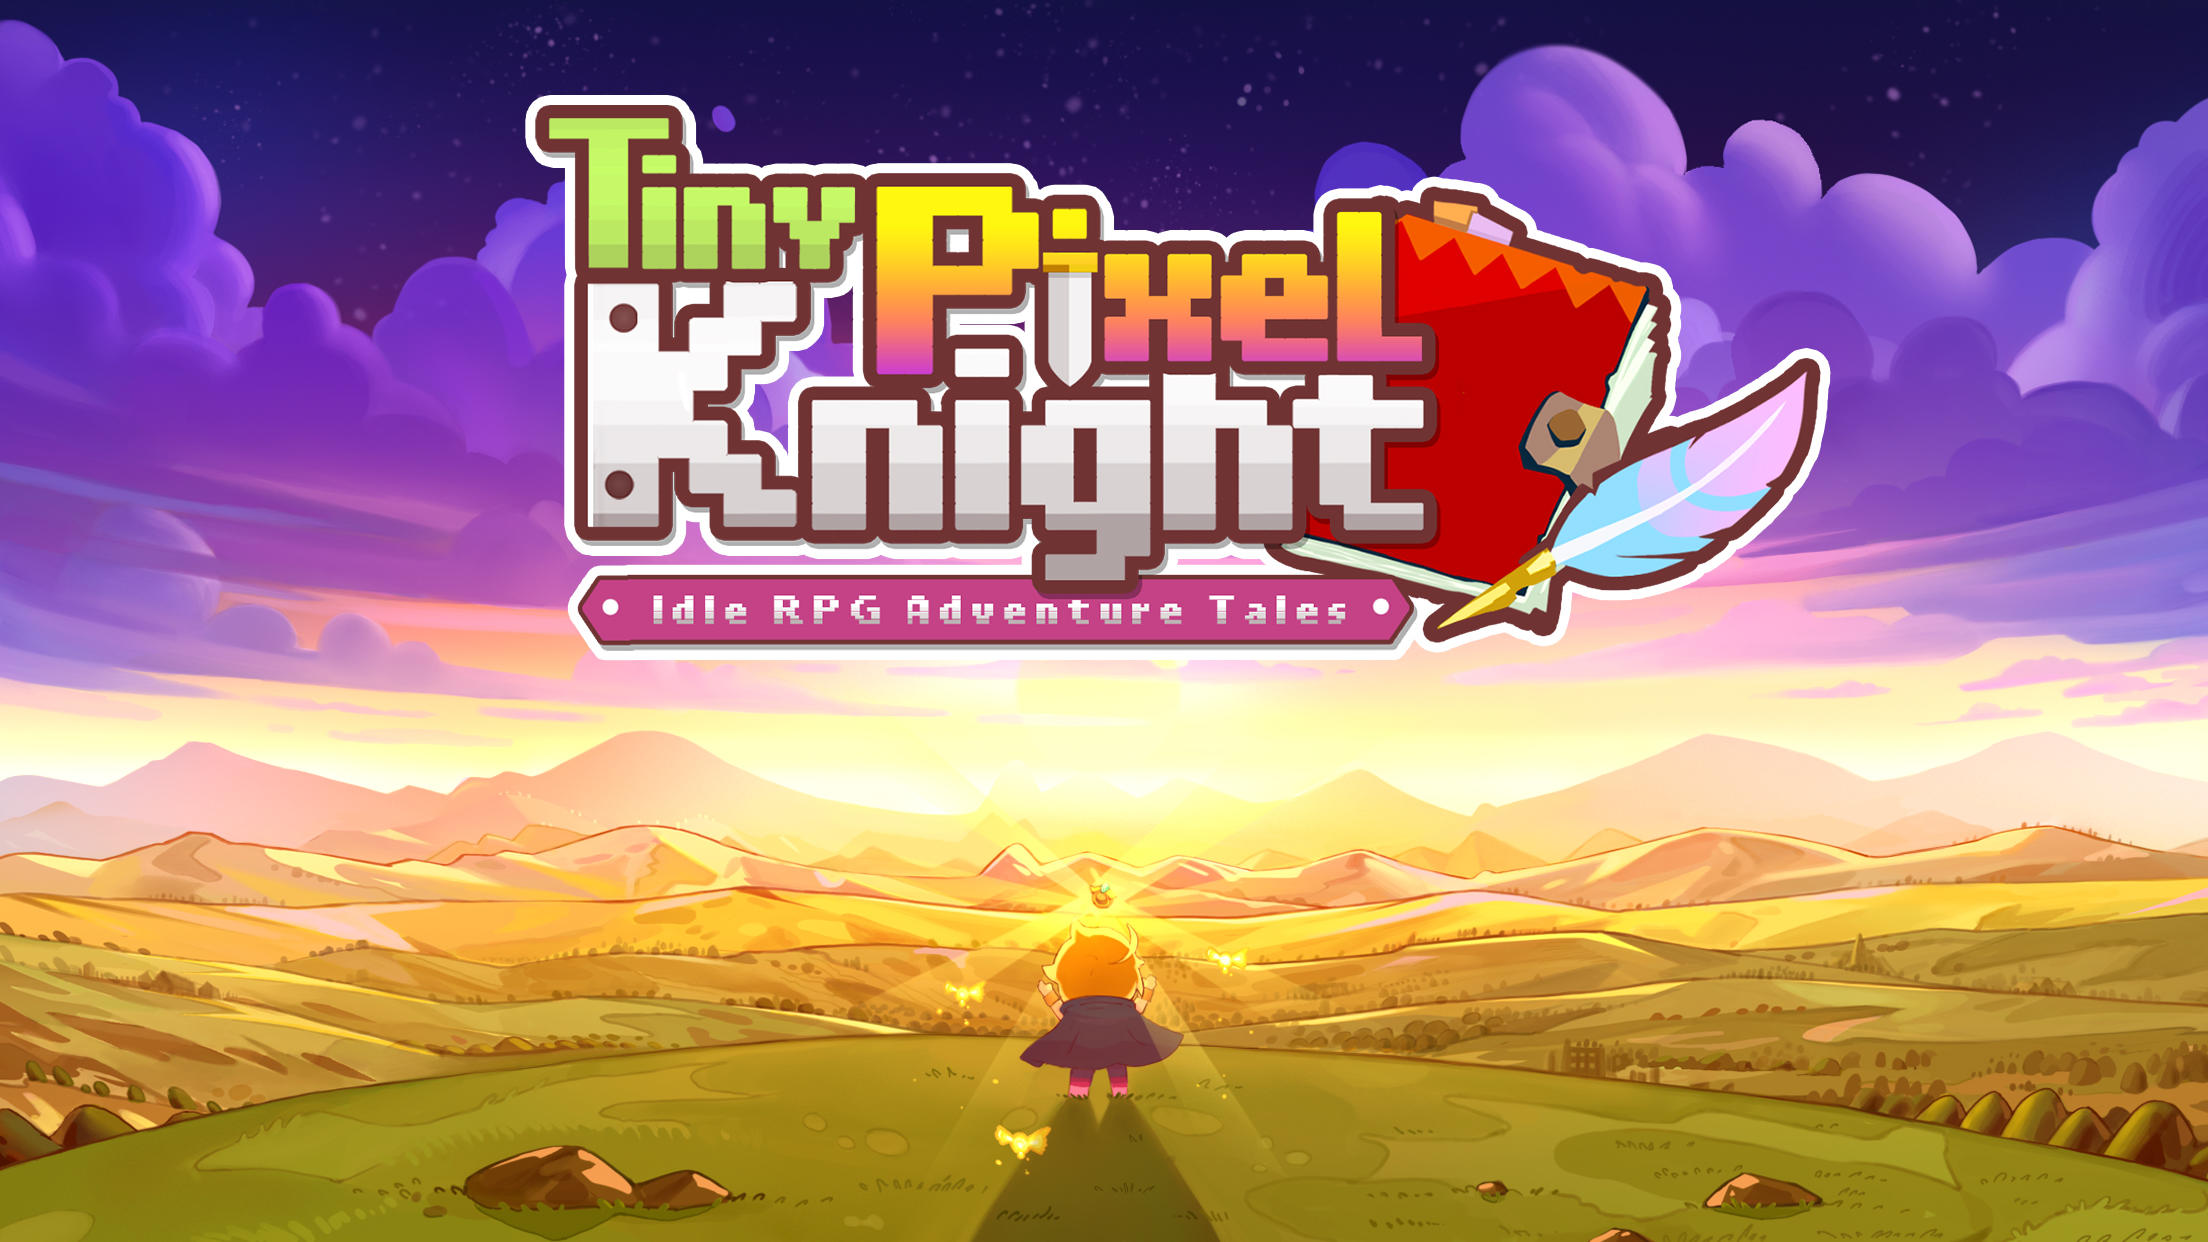 Screenshot 1 of Tiny Pixel Knight - Contos de aventura RPG inativos 1.1.5